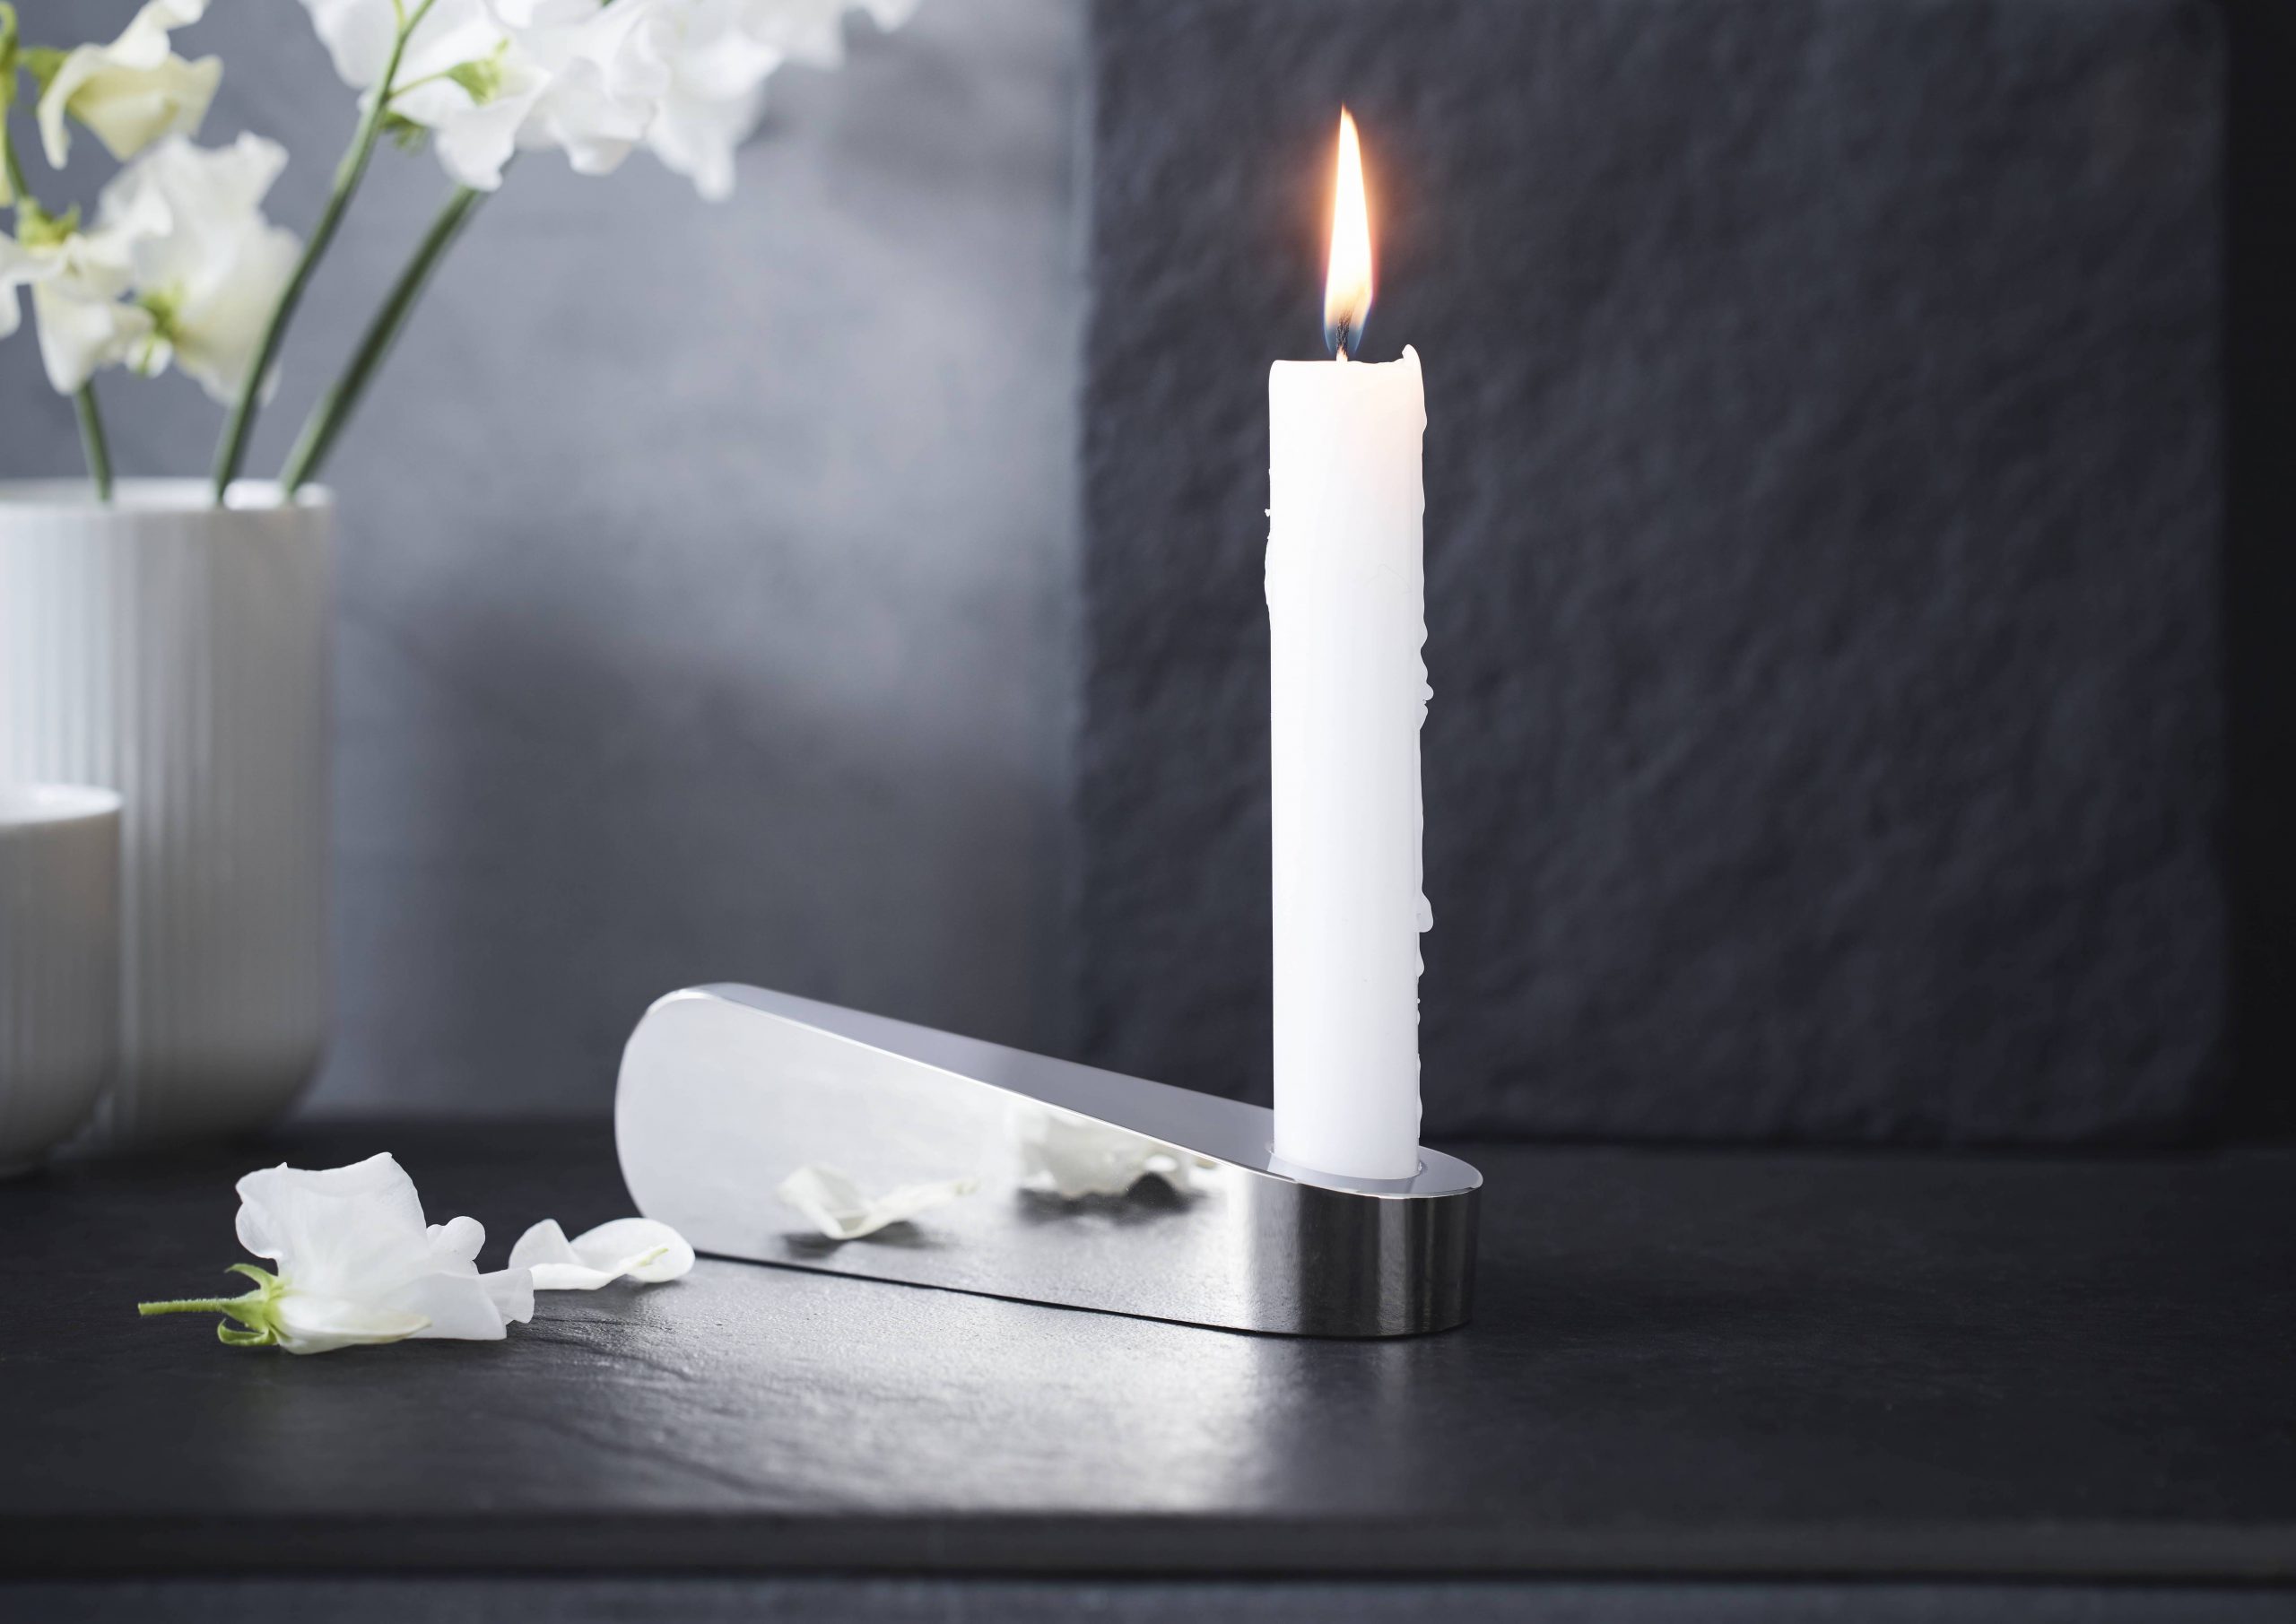 Silver Swan Lights candle holder by Debiasi Sandri for Rosenthal